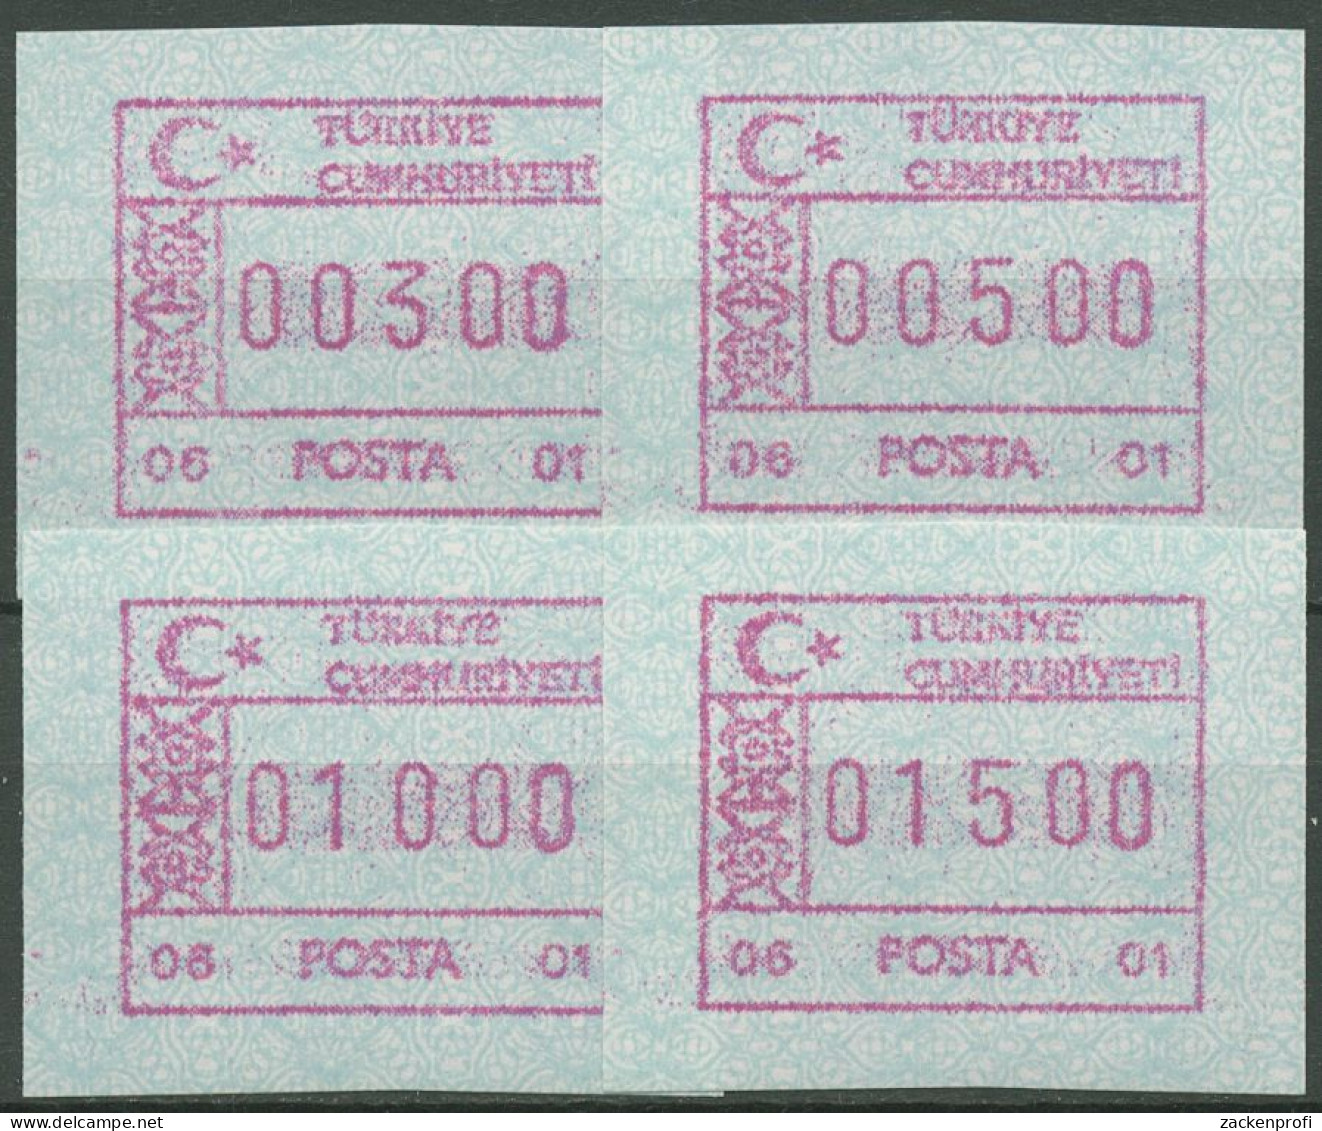 Türkei ATM 1992 Ornamente Automat 06 01, Satz 4 Werte ATM 2.2 S1 Postfrisch - Distributeurs